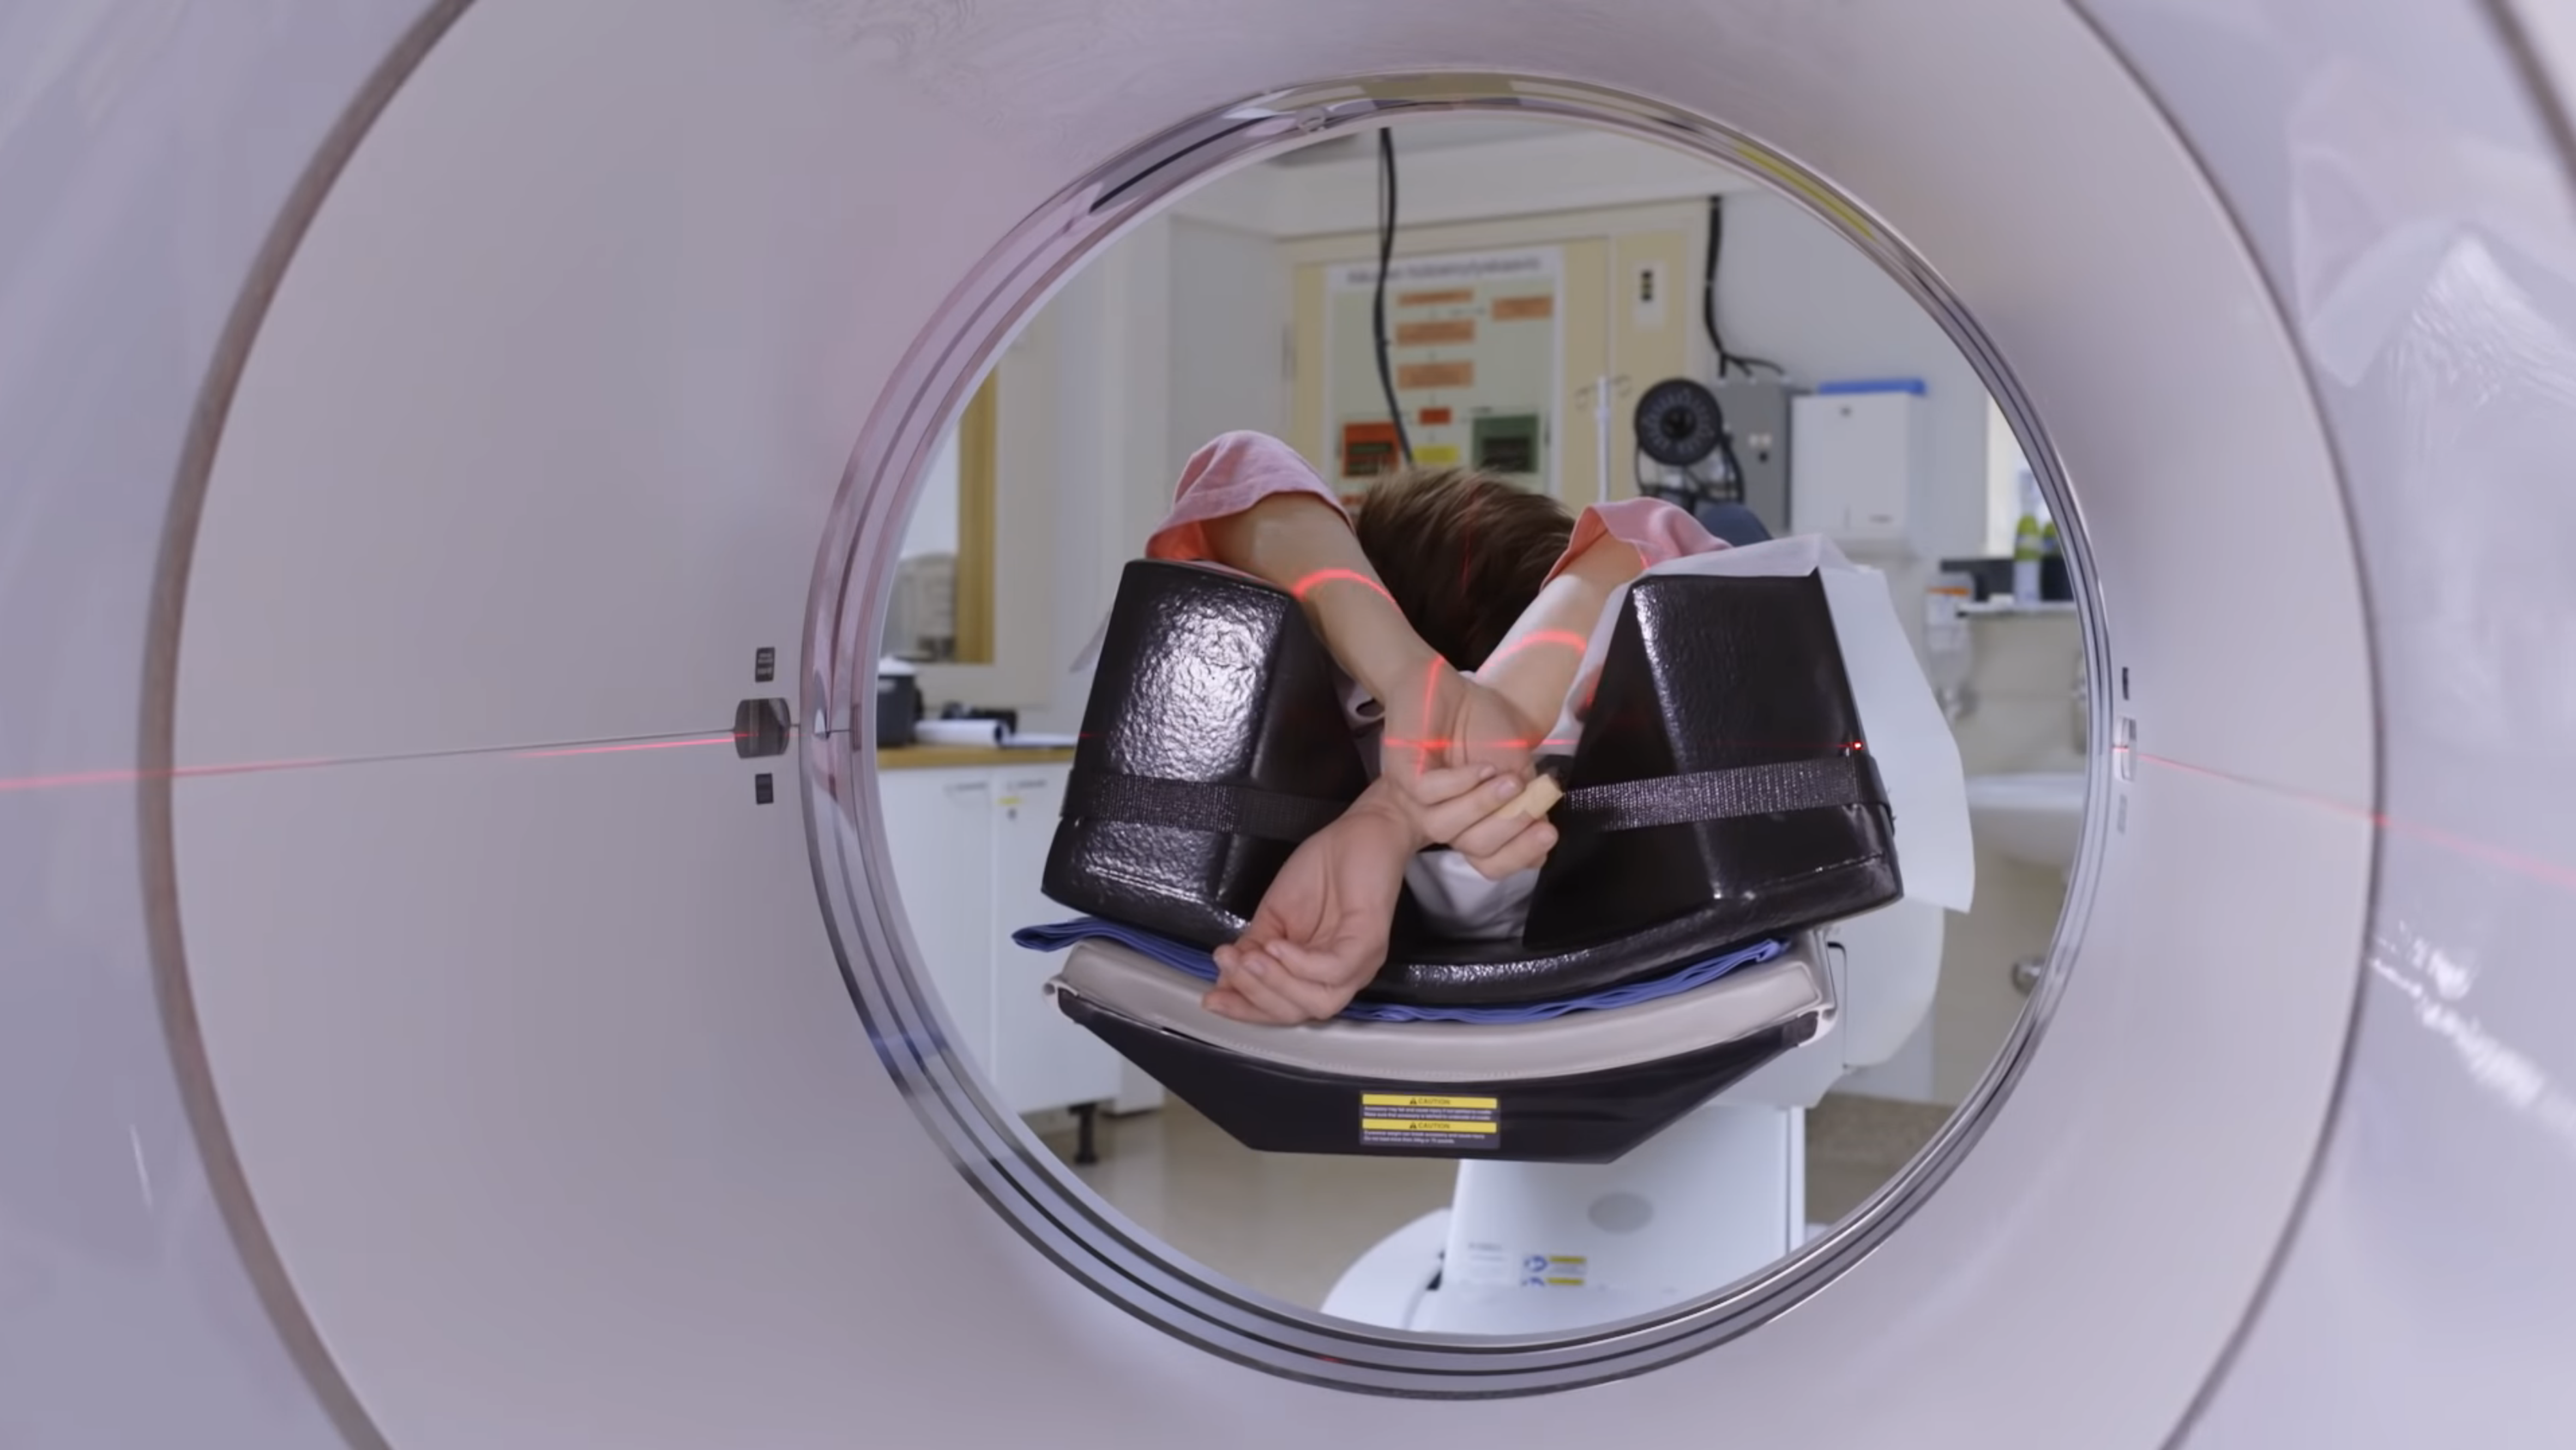 New generation full body PET scanner to Turku PET Centre